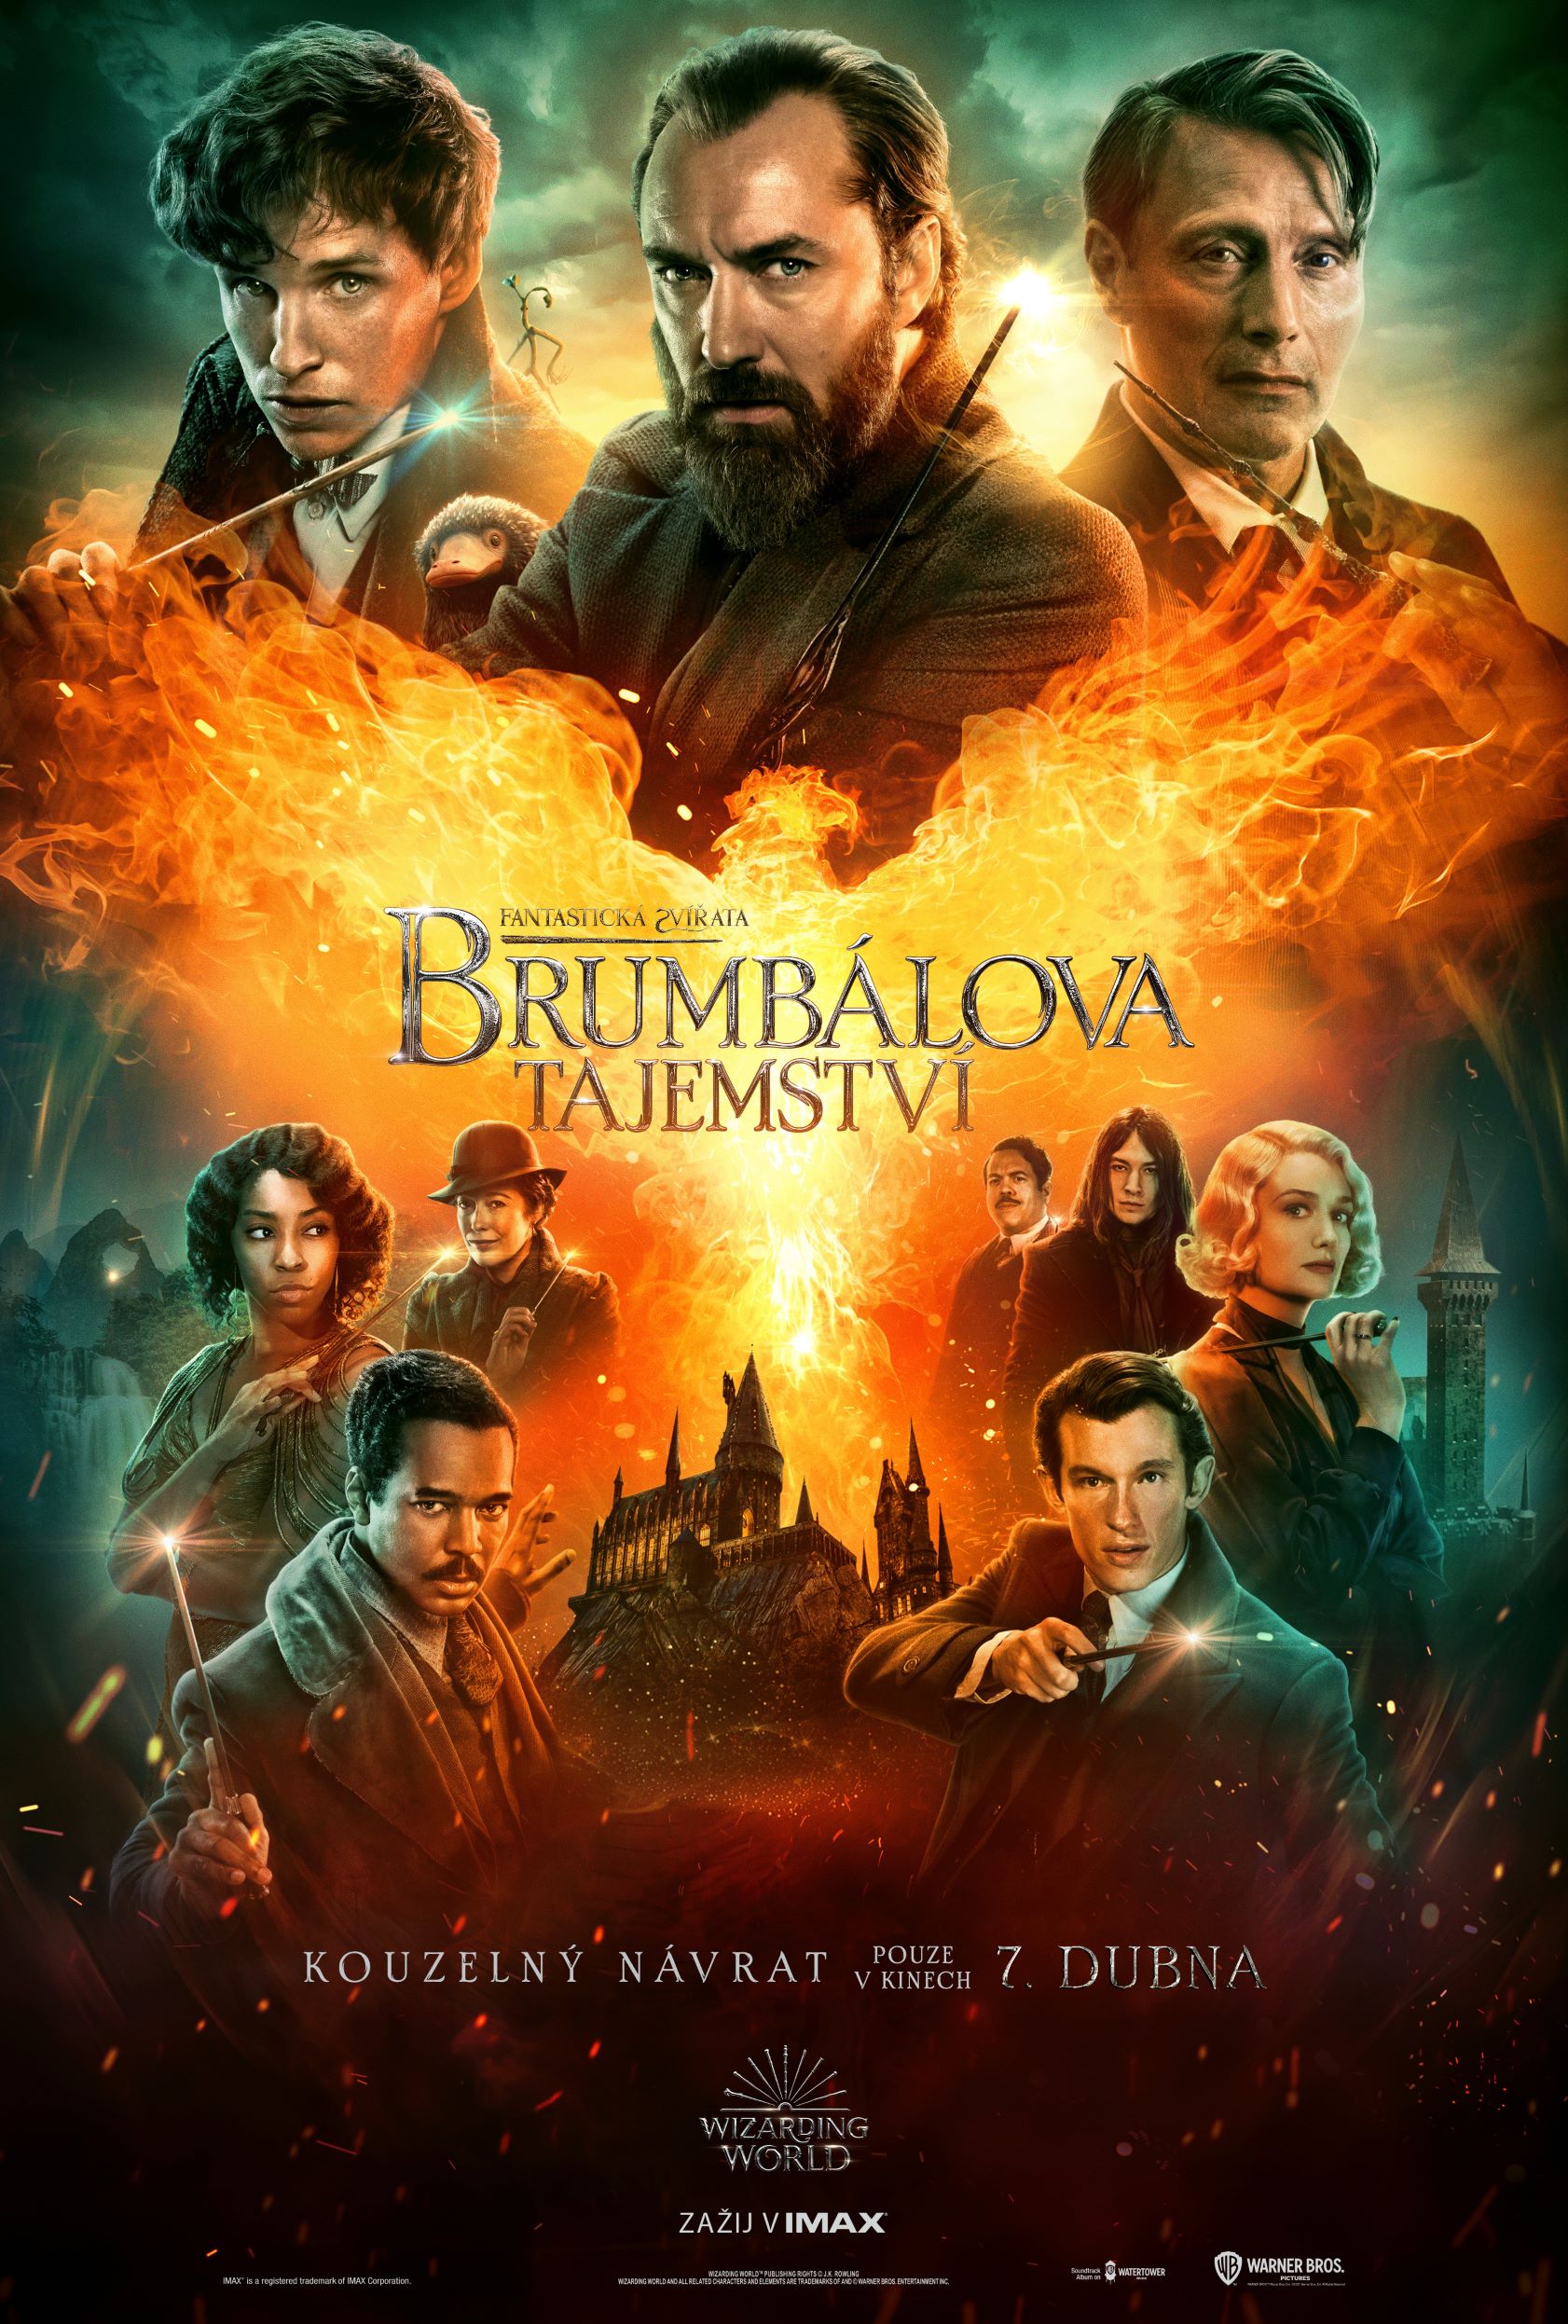 Stiahni si Filmy DVD Fantastická zvířata: Brumbálova tajemství / Fantastic Beasts: The Secrets of Dumbledore (2022)(CZ/EN) = CSFD 55%